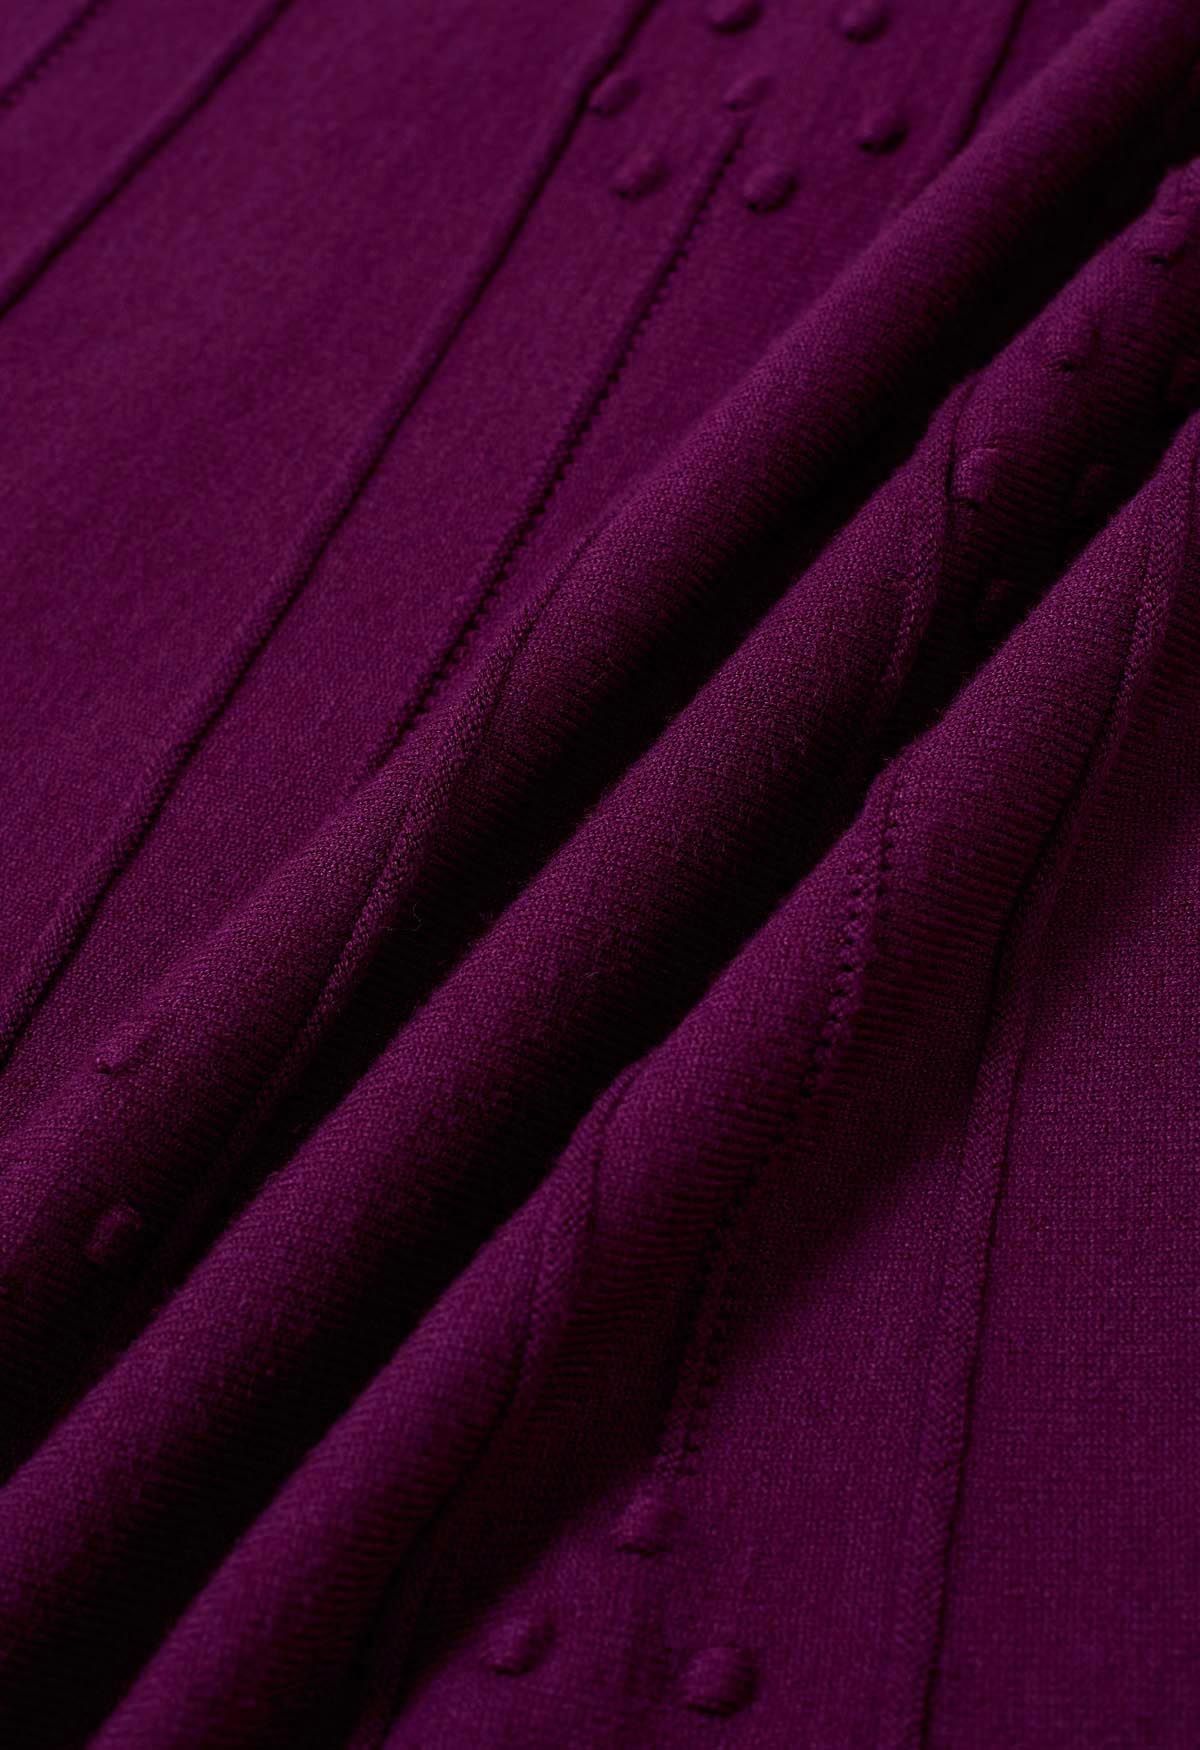 Embossed Dots Seam Knit Midi Skirt in Purple